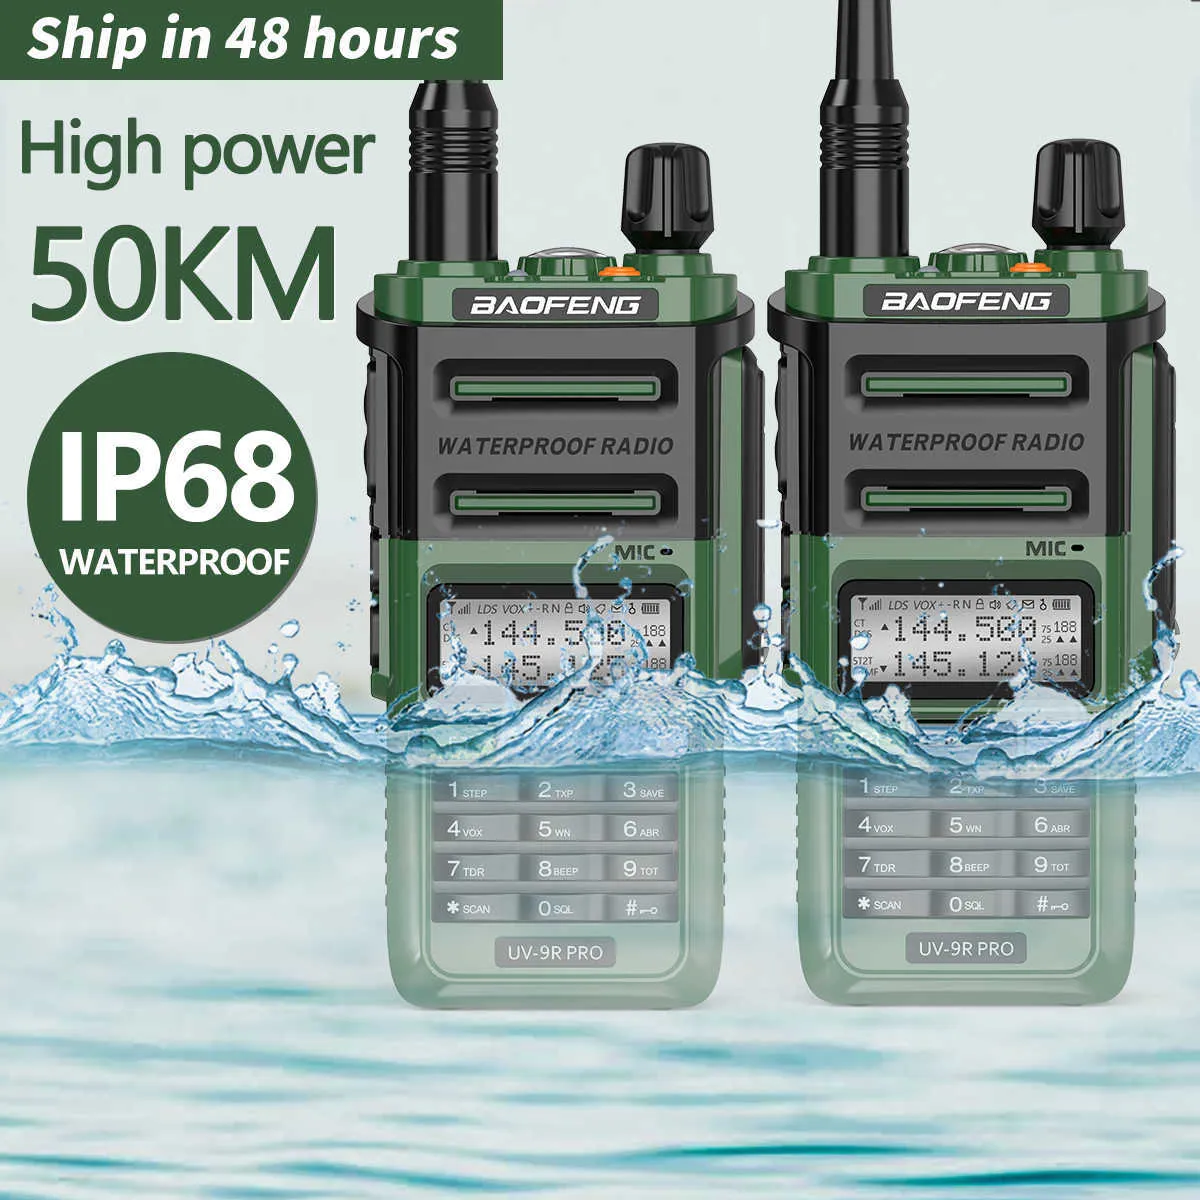 Baofeng UV-9R PRO IP68 Waterproof Dual Band 9R Plus Walkie Talkie Baofeng UV-9R Plus UV-XR BF-9700 Ham Two Way Radio